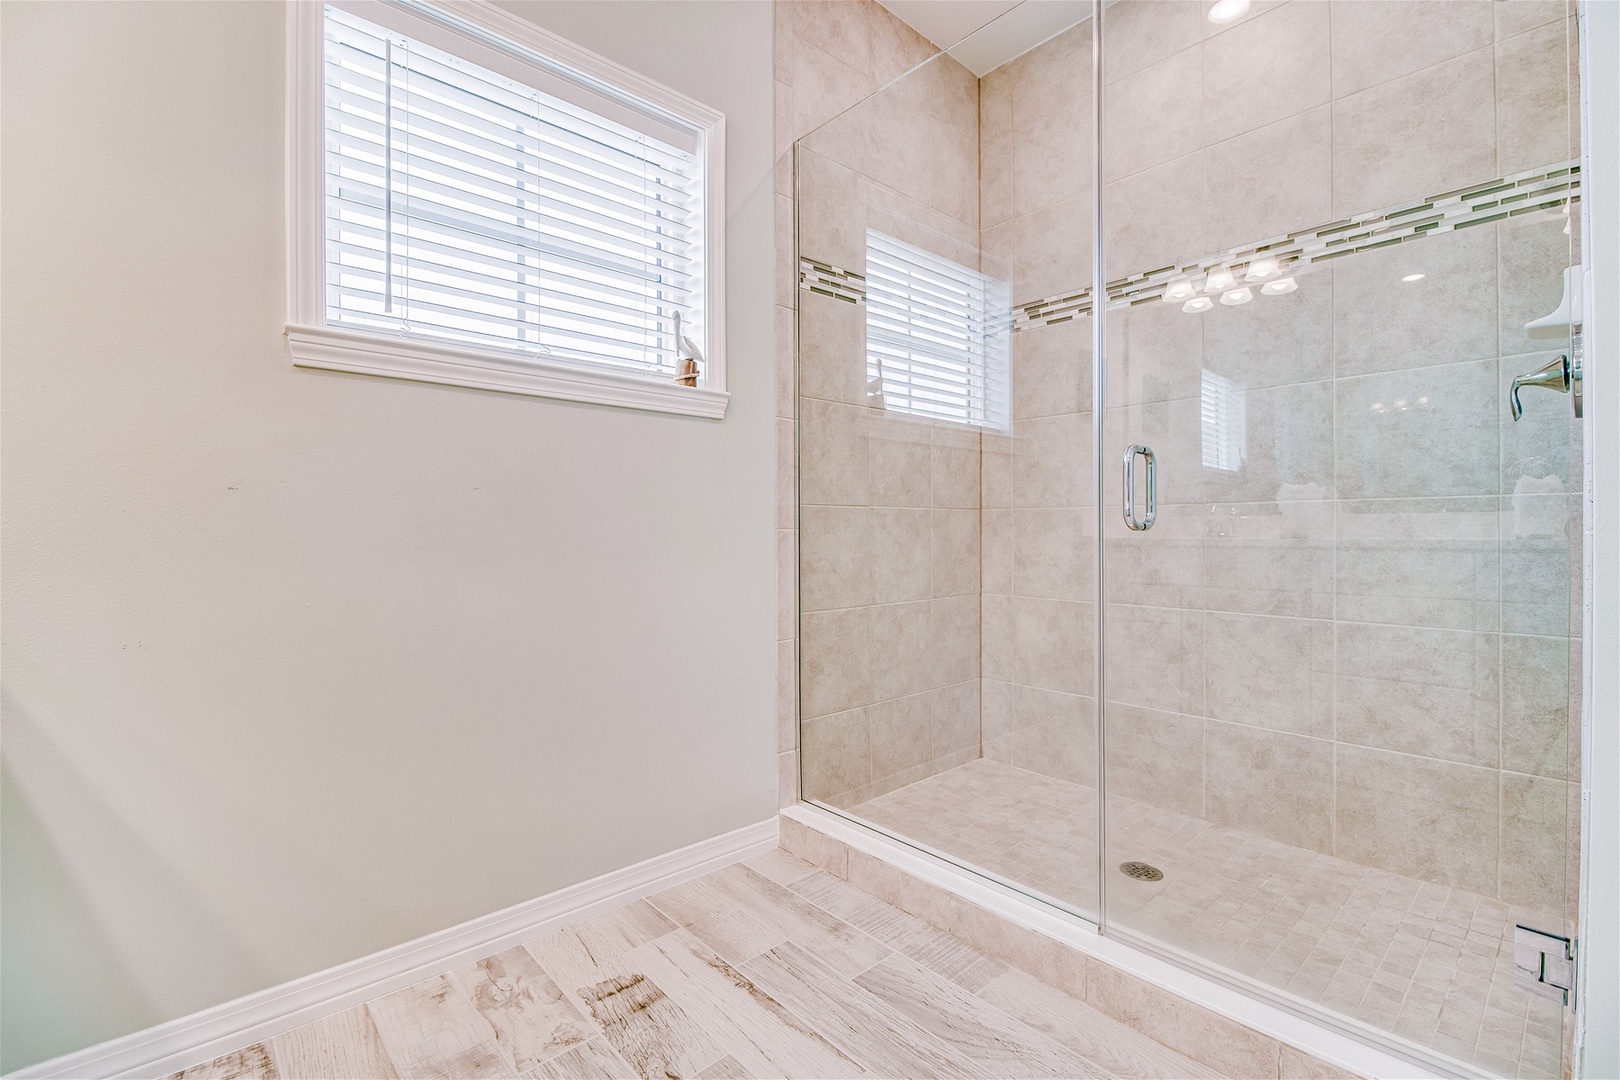 Lost Key Golf Coast Villa Guest Bathroom #1 with Glass Shower